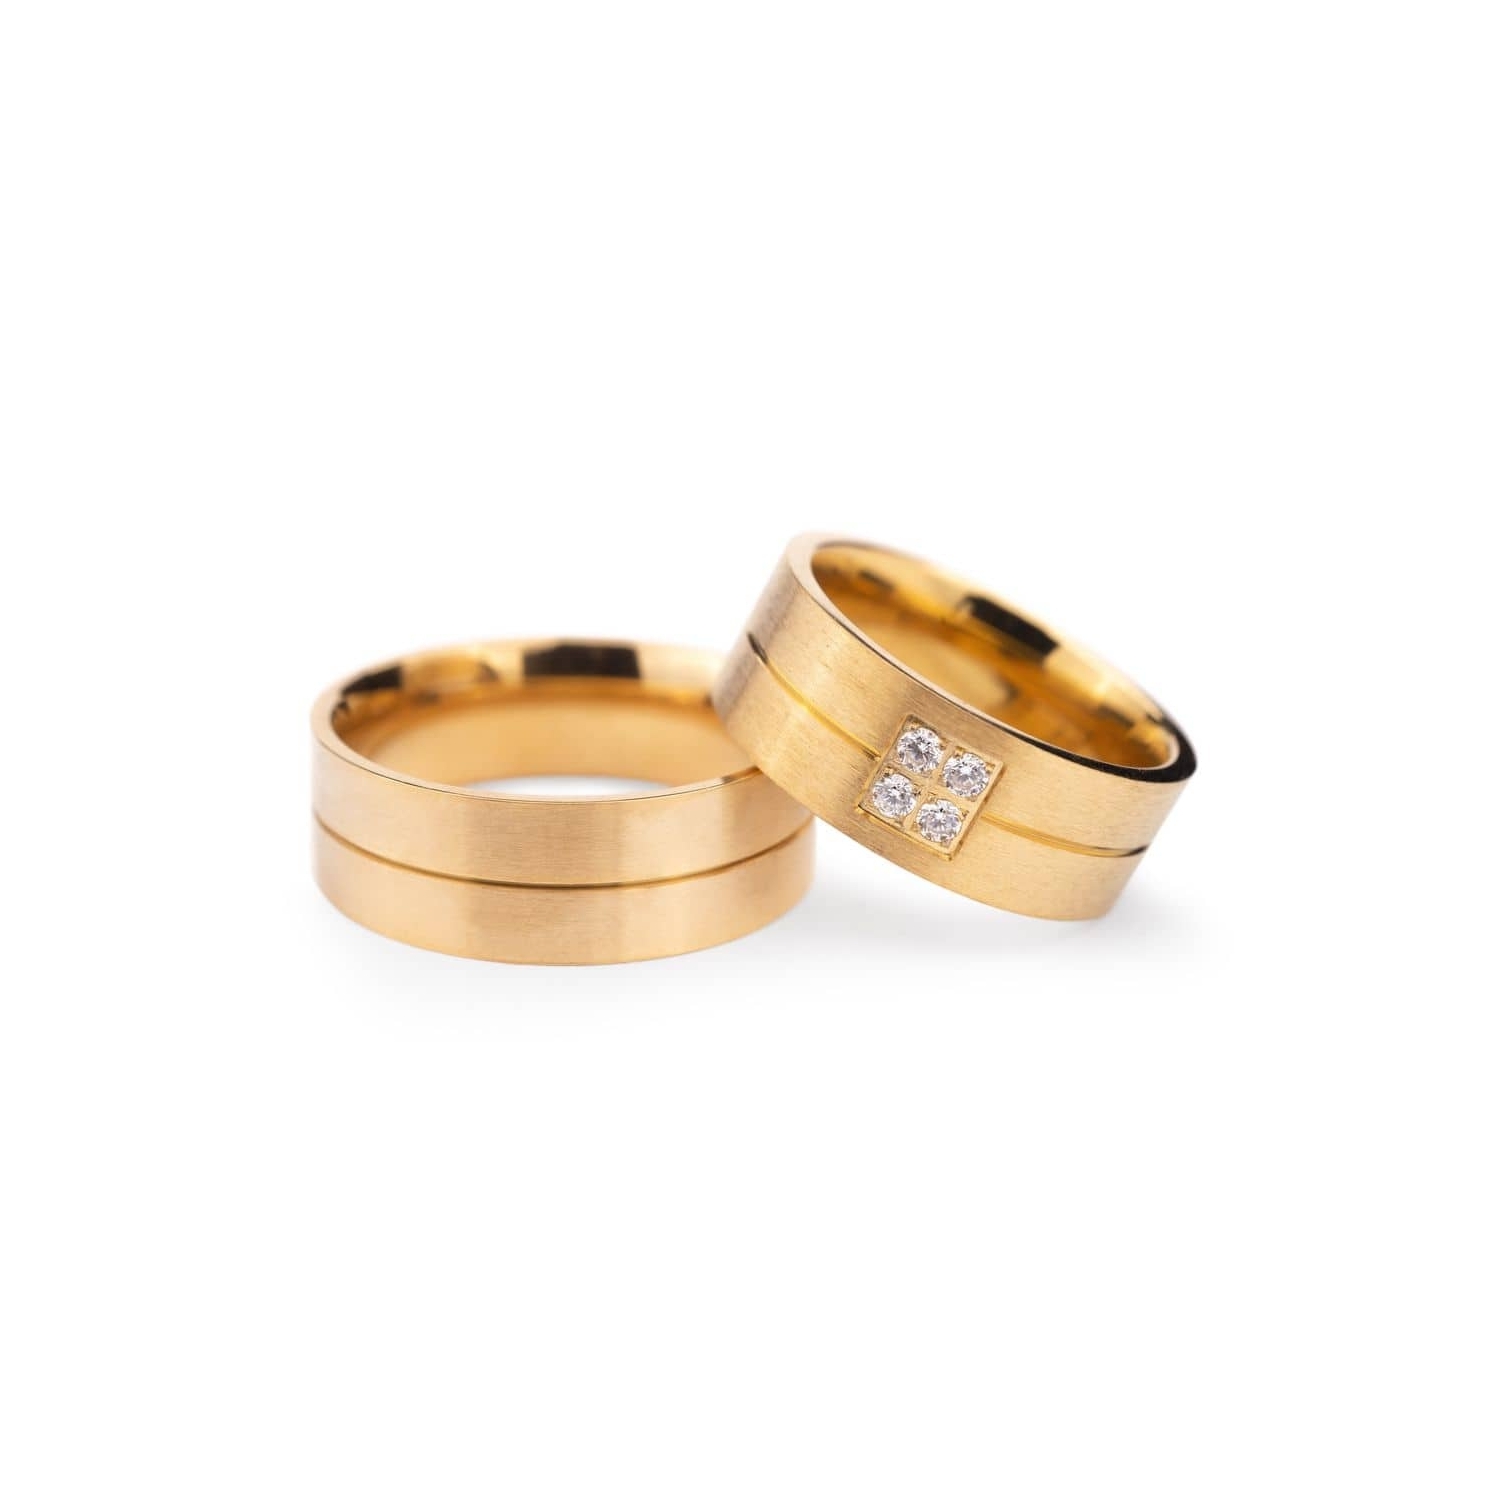 Golden wedding rings with diamonds "VMA 130"